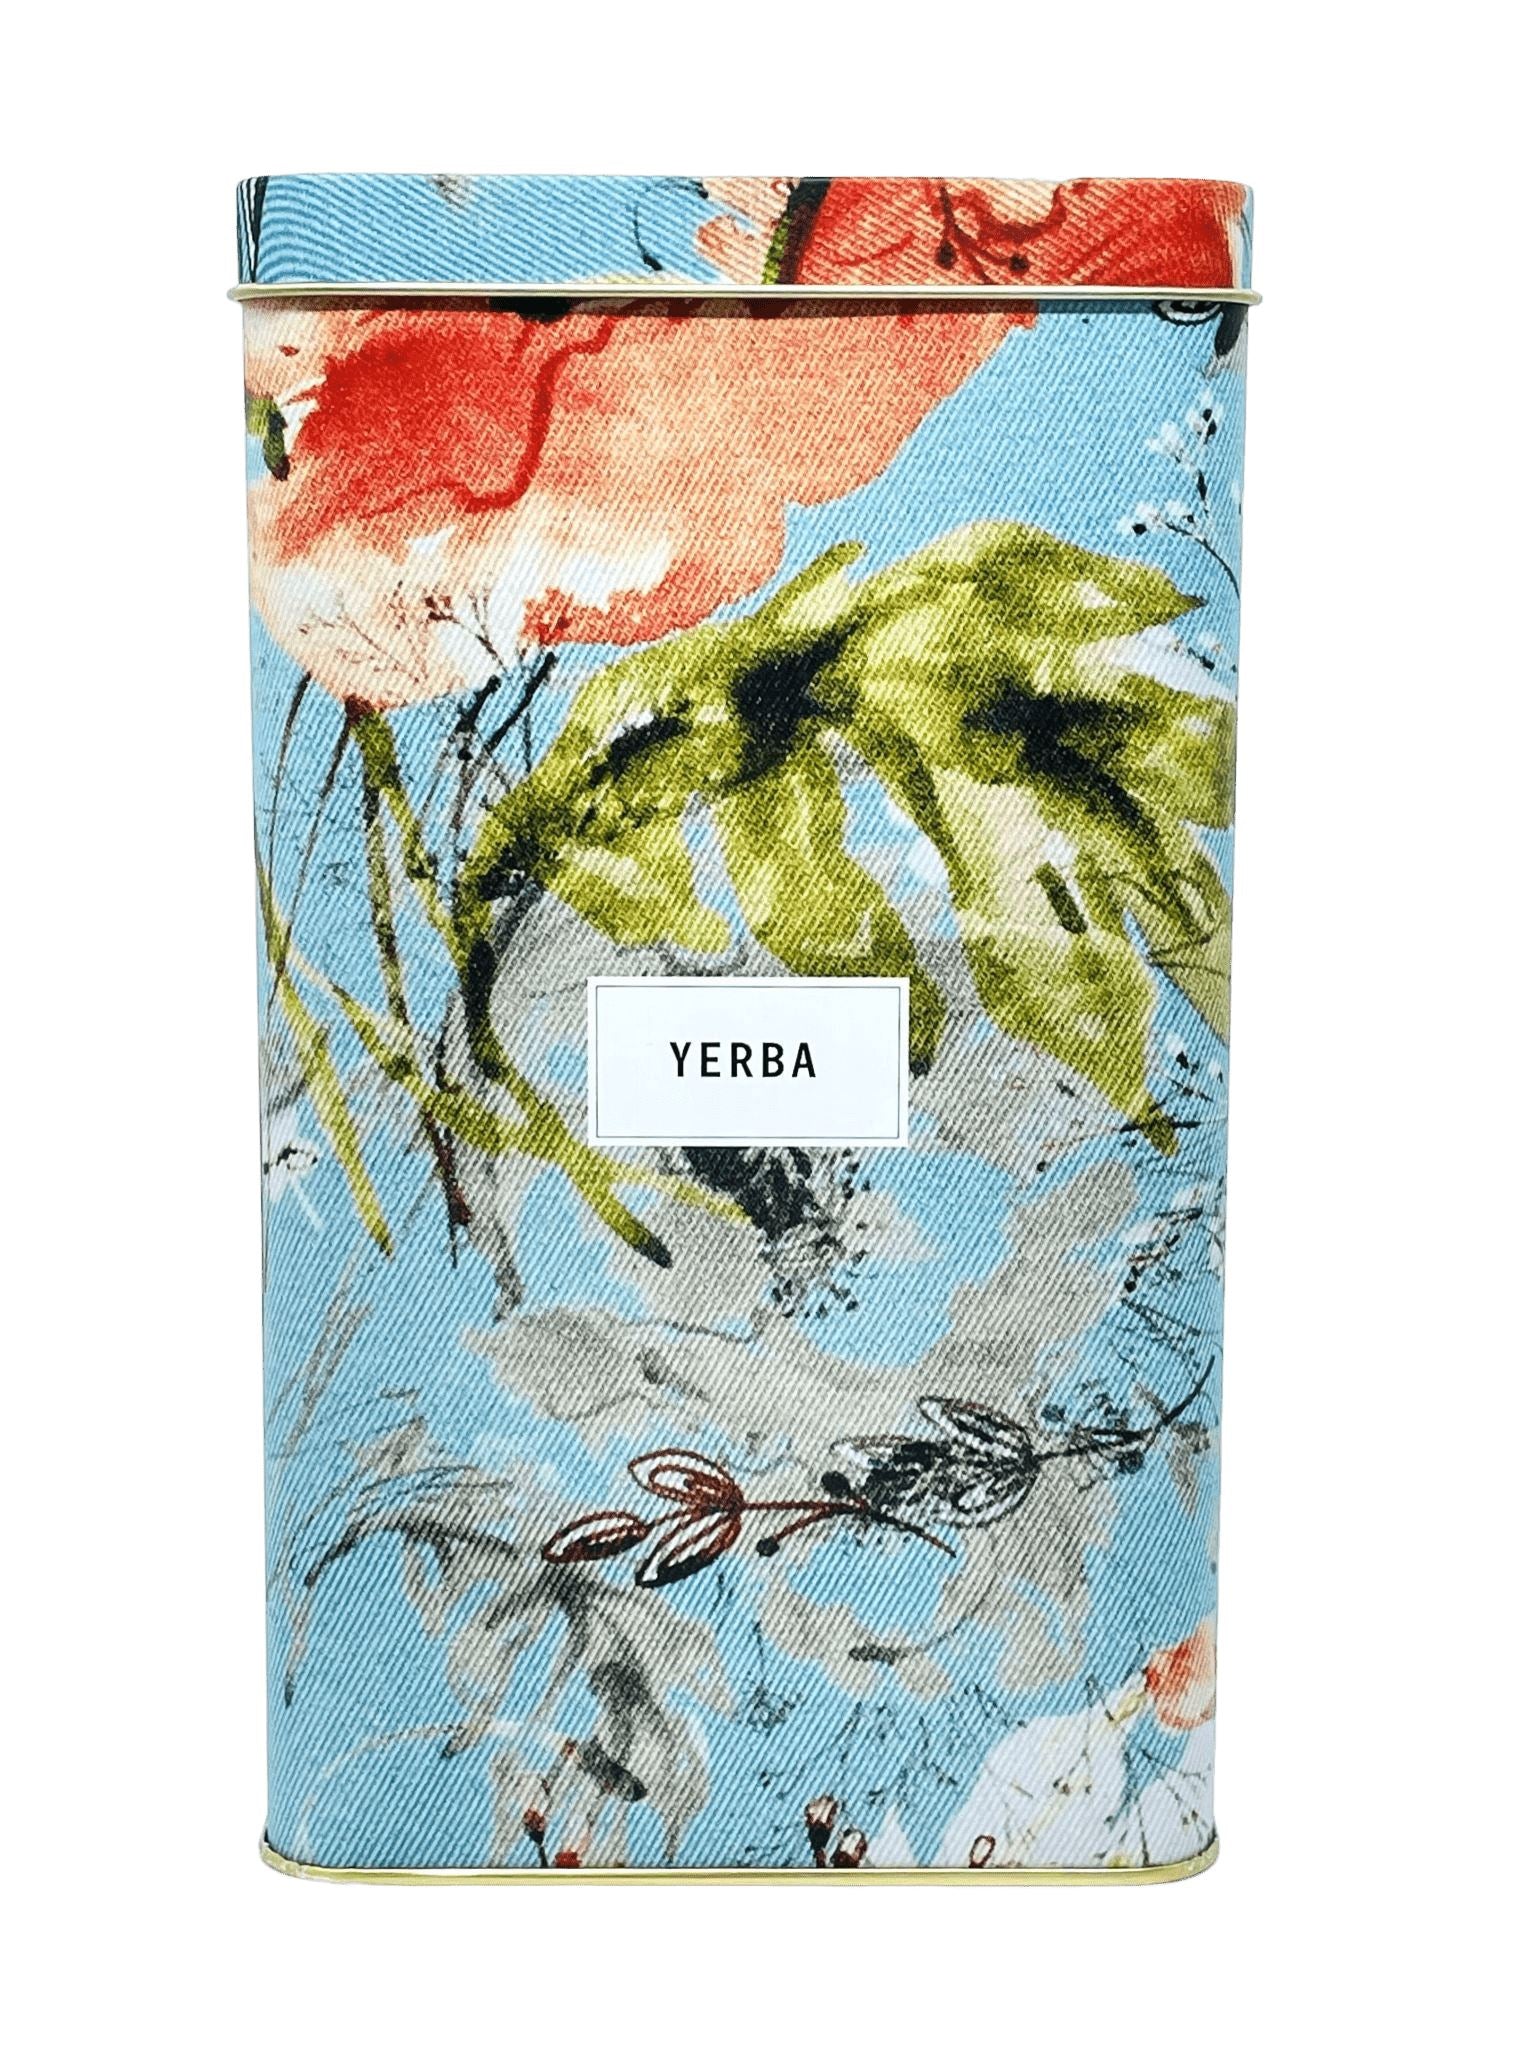 Yerba Mate Container Spring (Yerbera) Mates Hispanic Pantry 